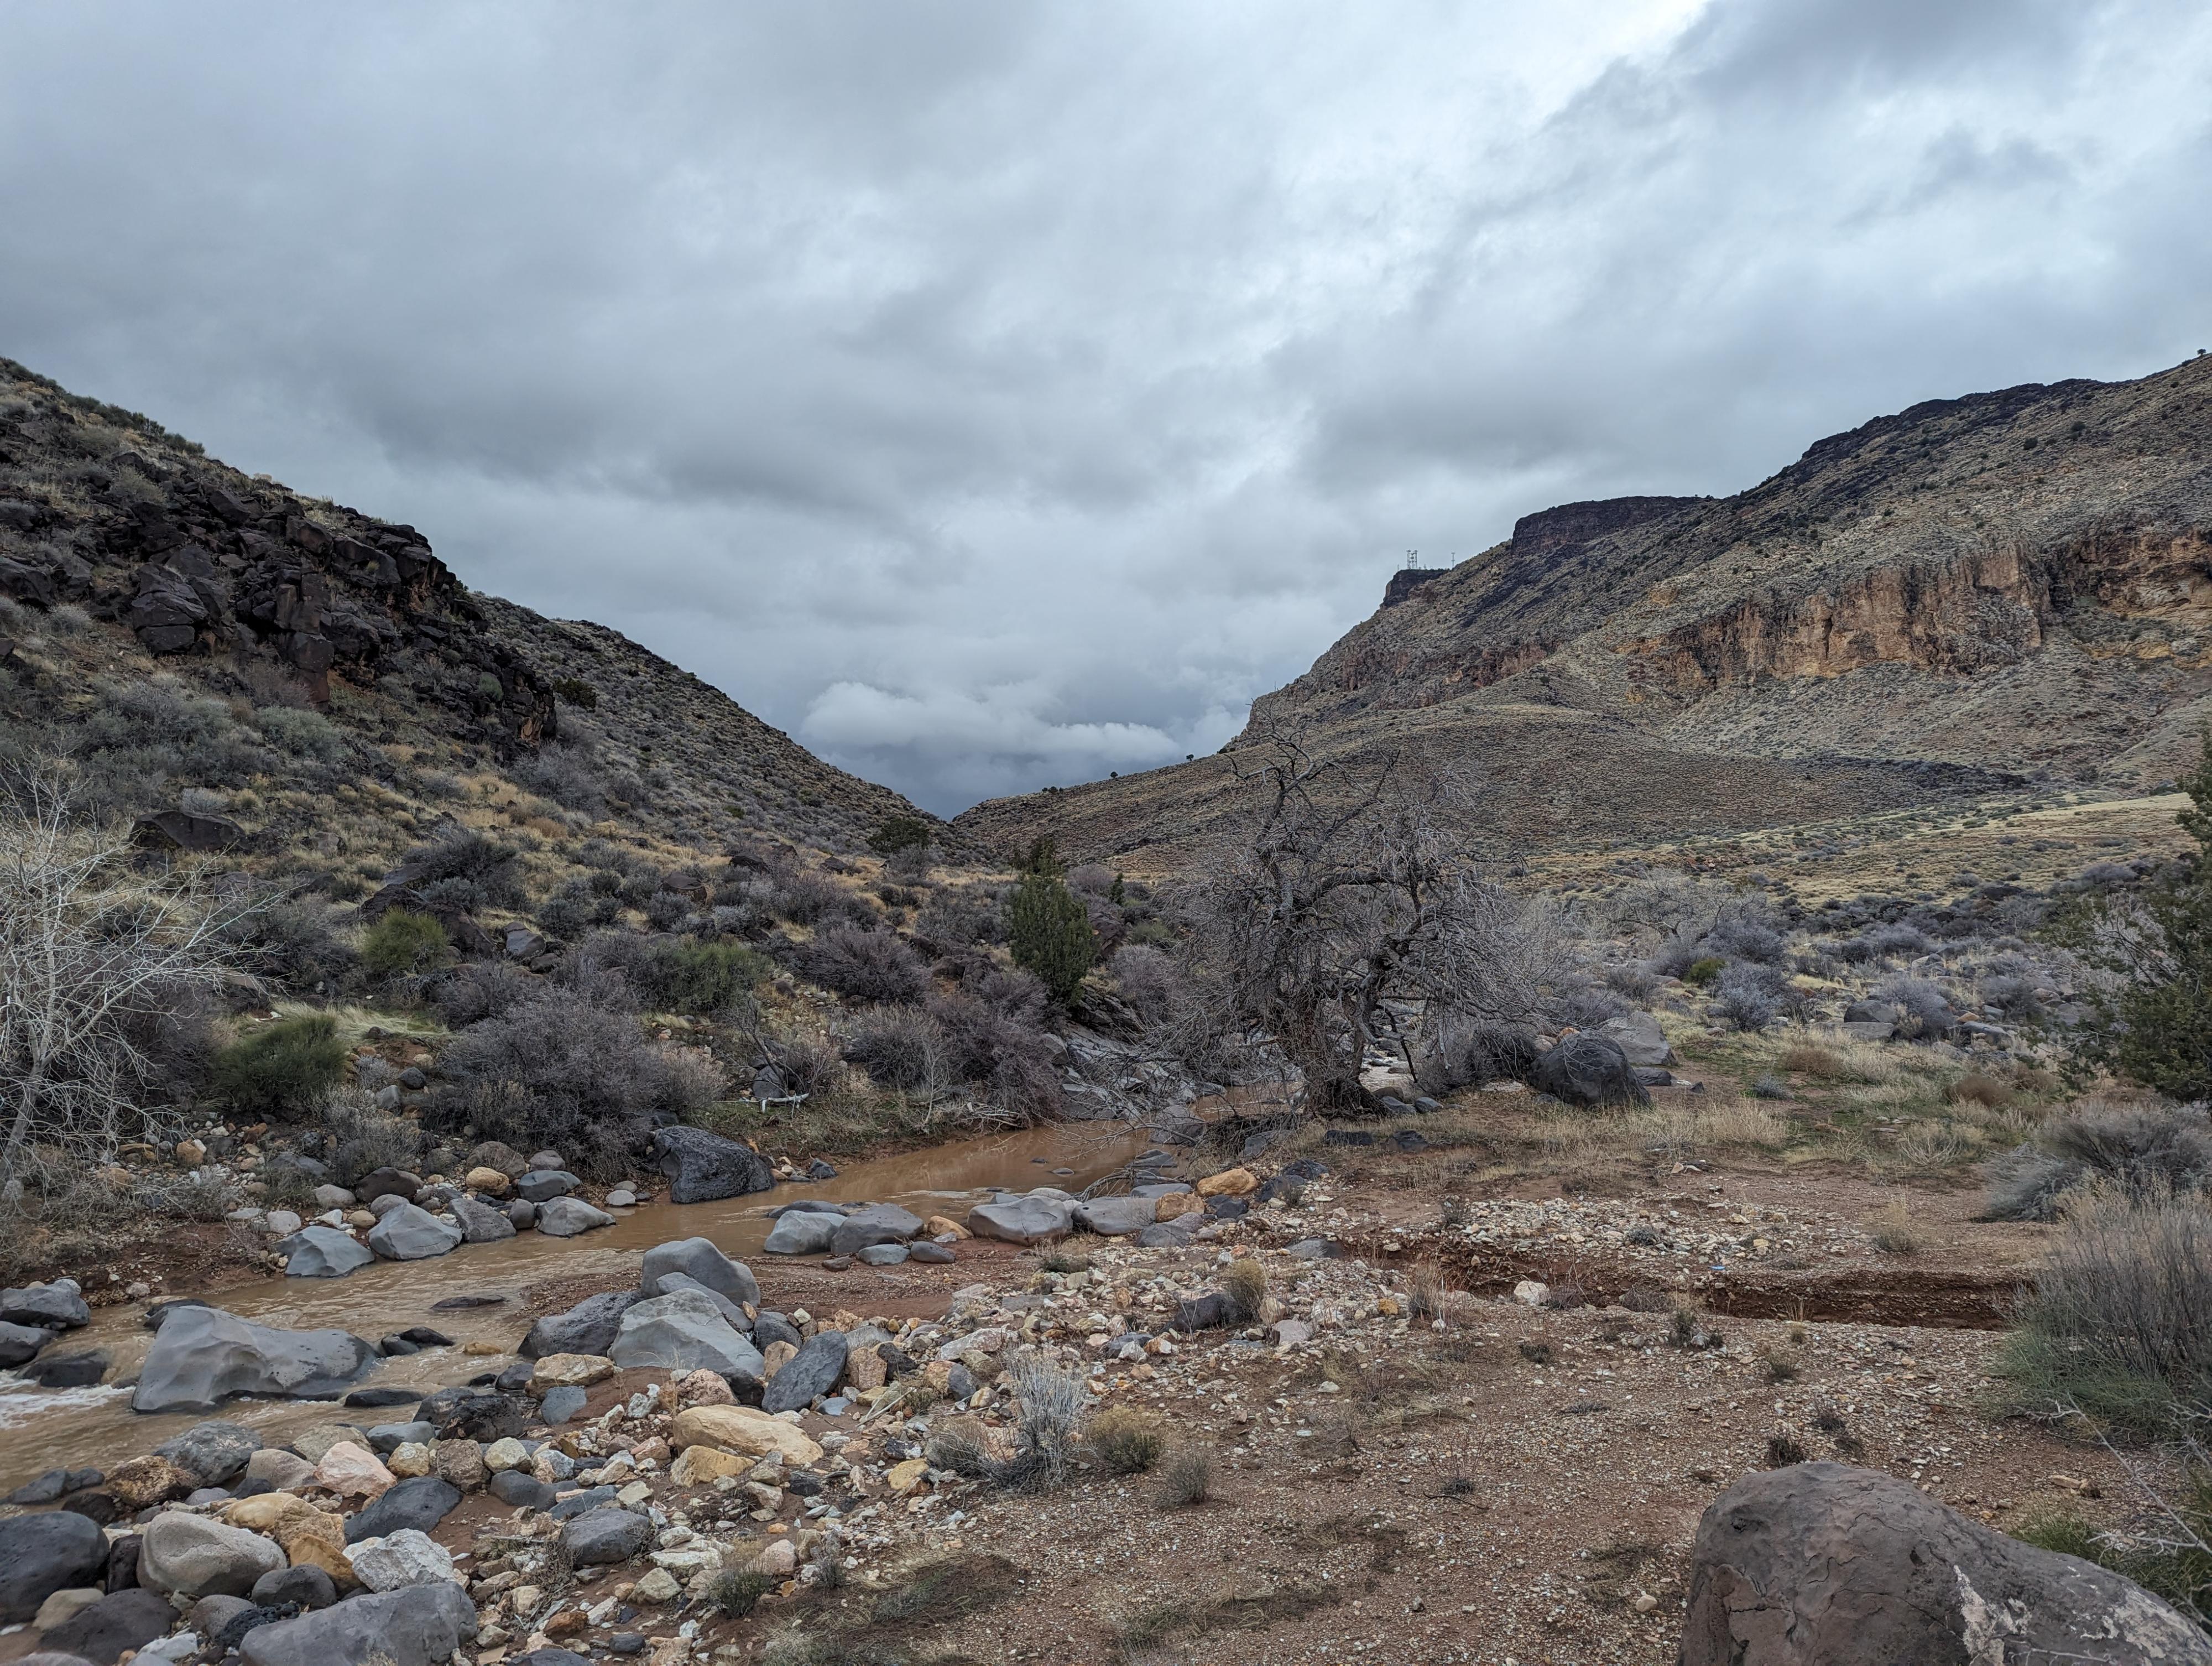 Rocky creek flowing between mesas beneath a cloudy sky.